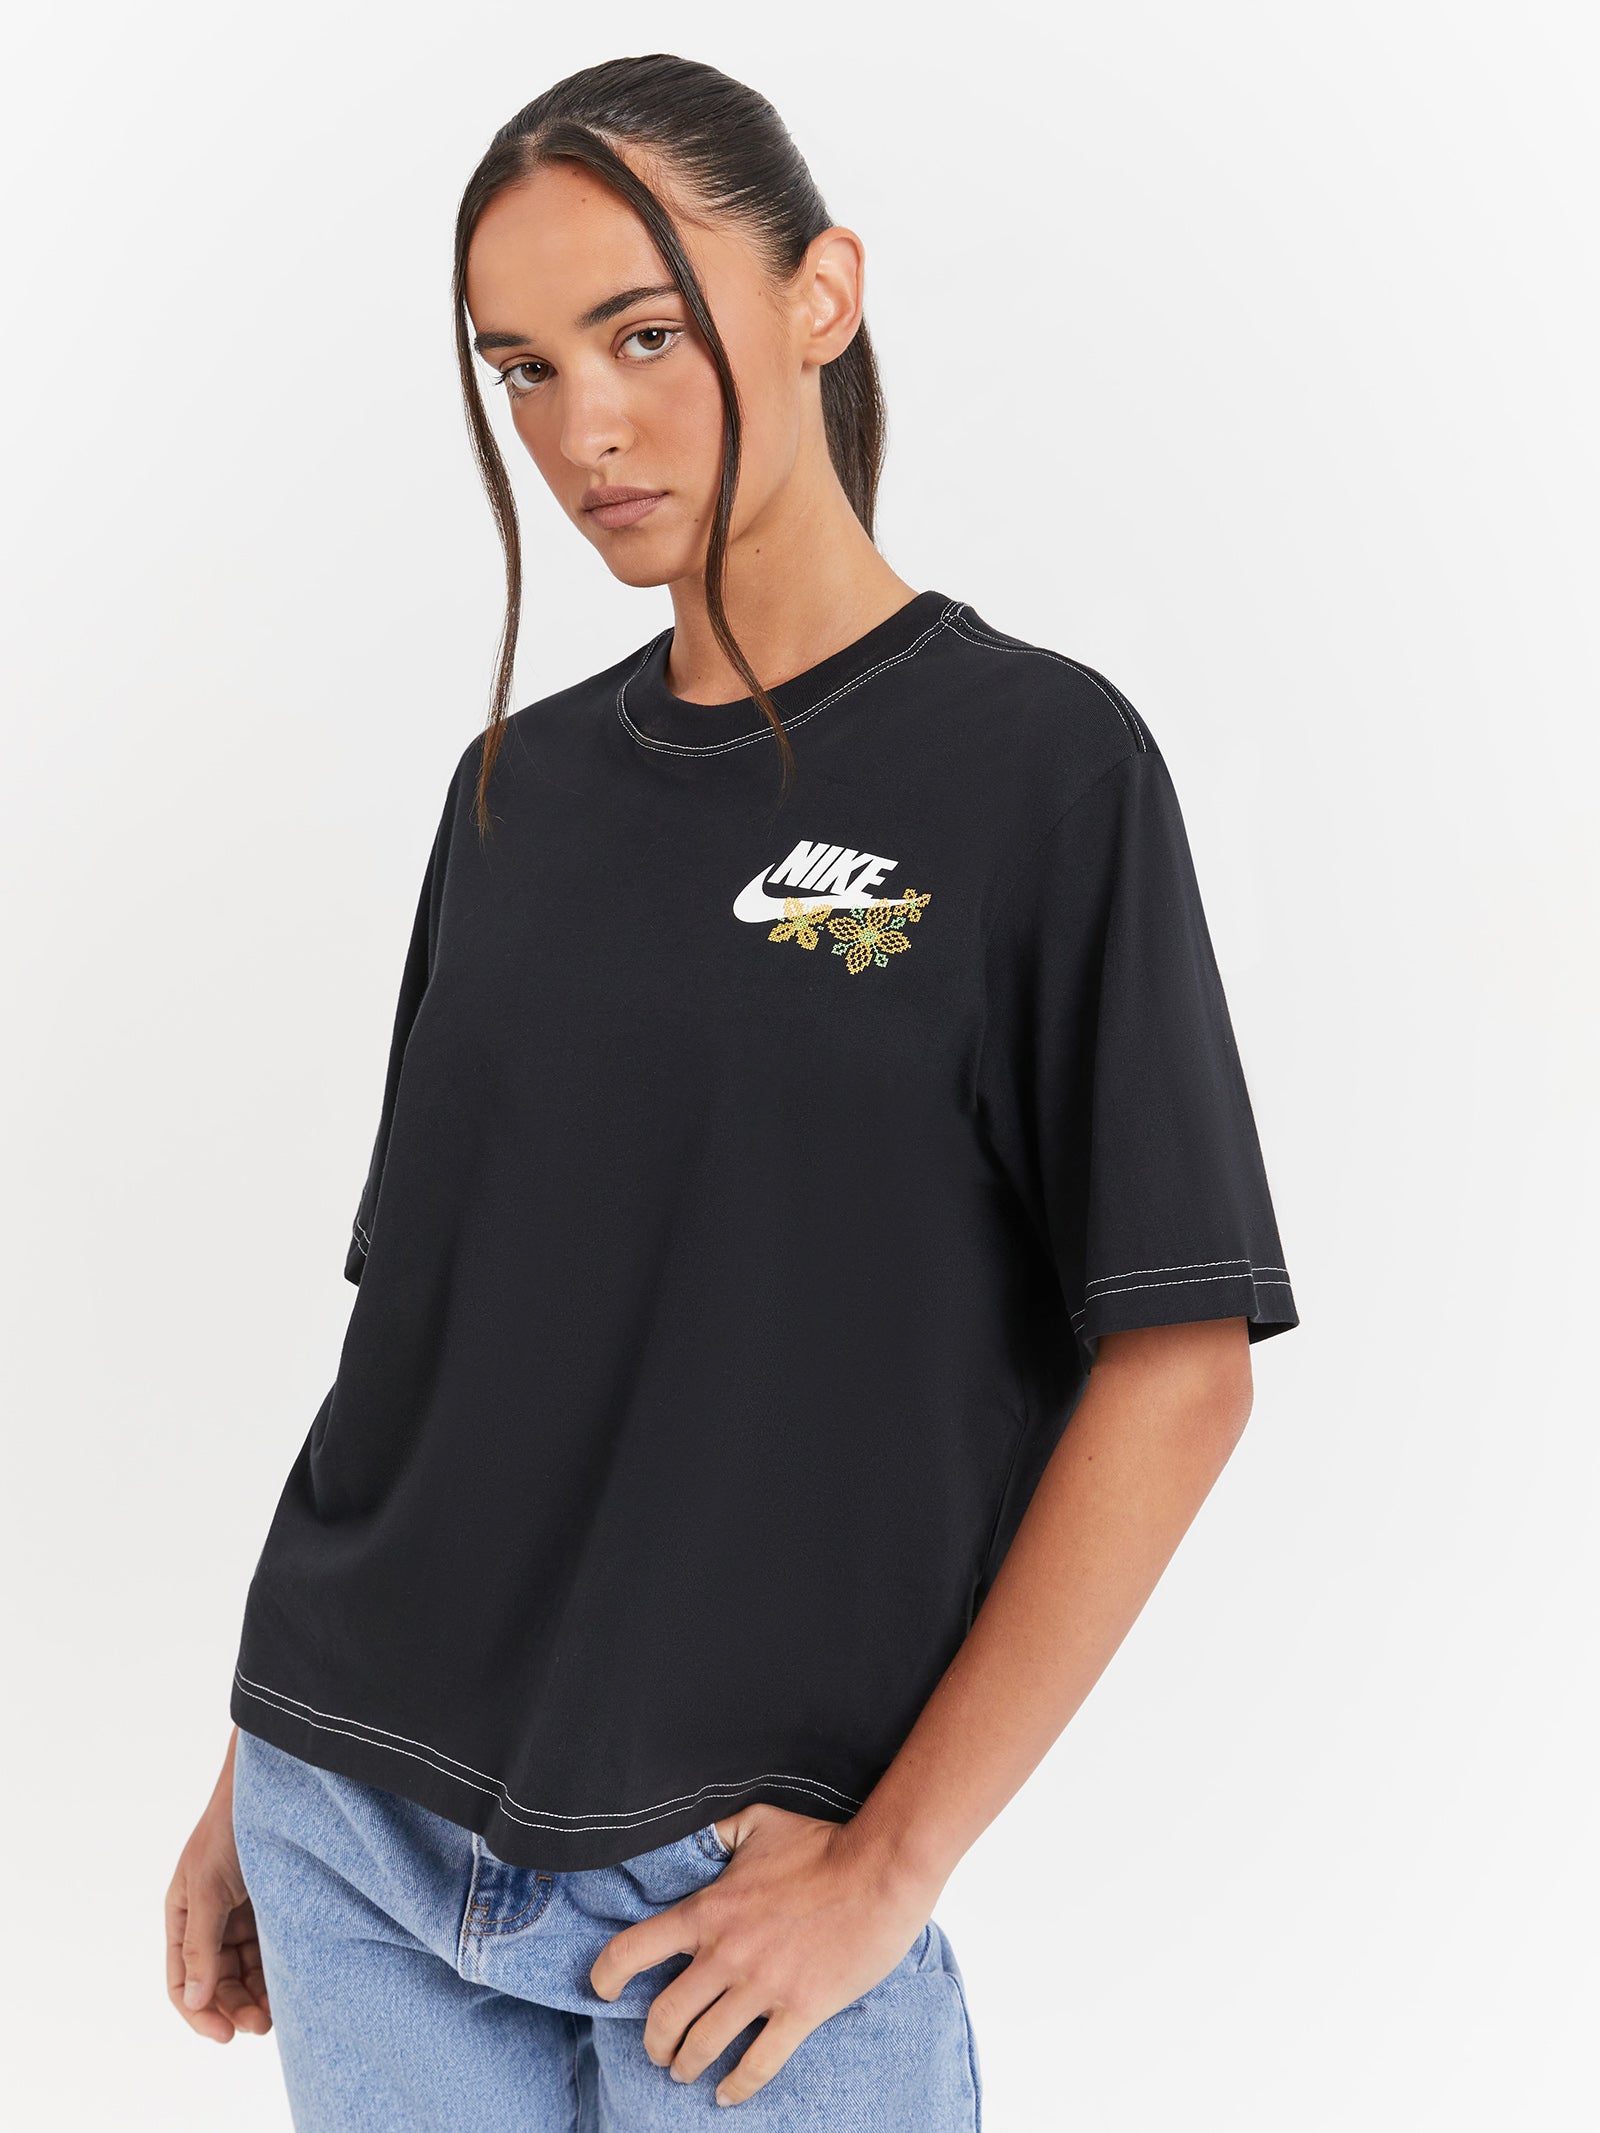 Sportswear OC1 Short Sleeve Boxy T-Shirt in Black - Glue Store